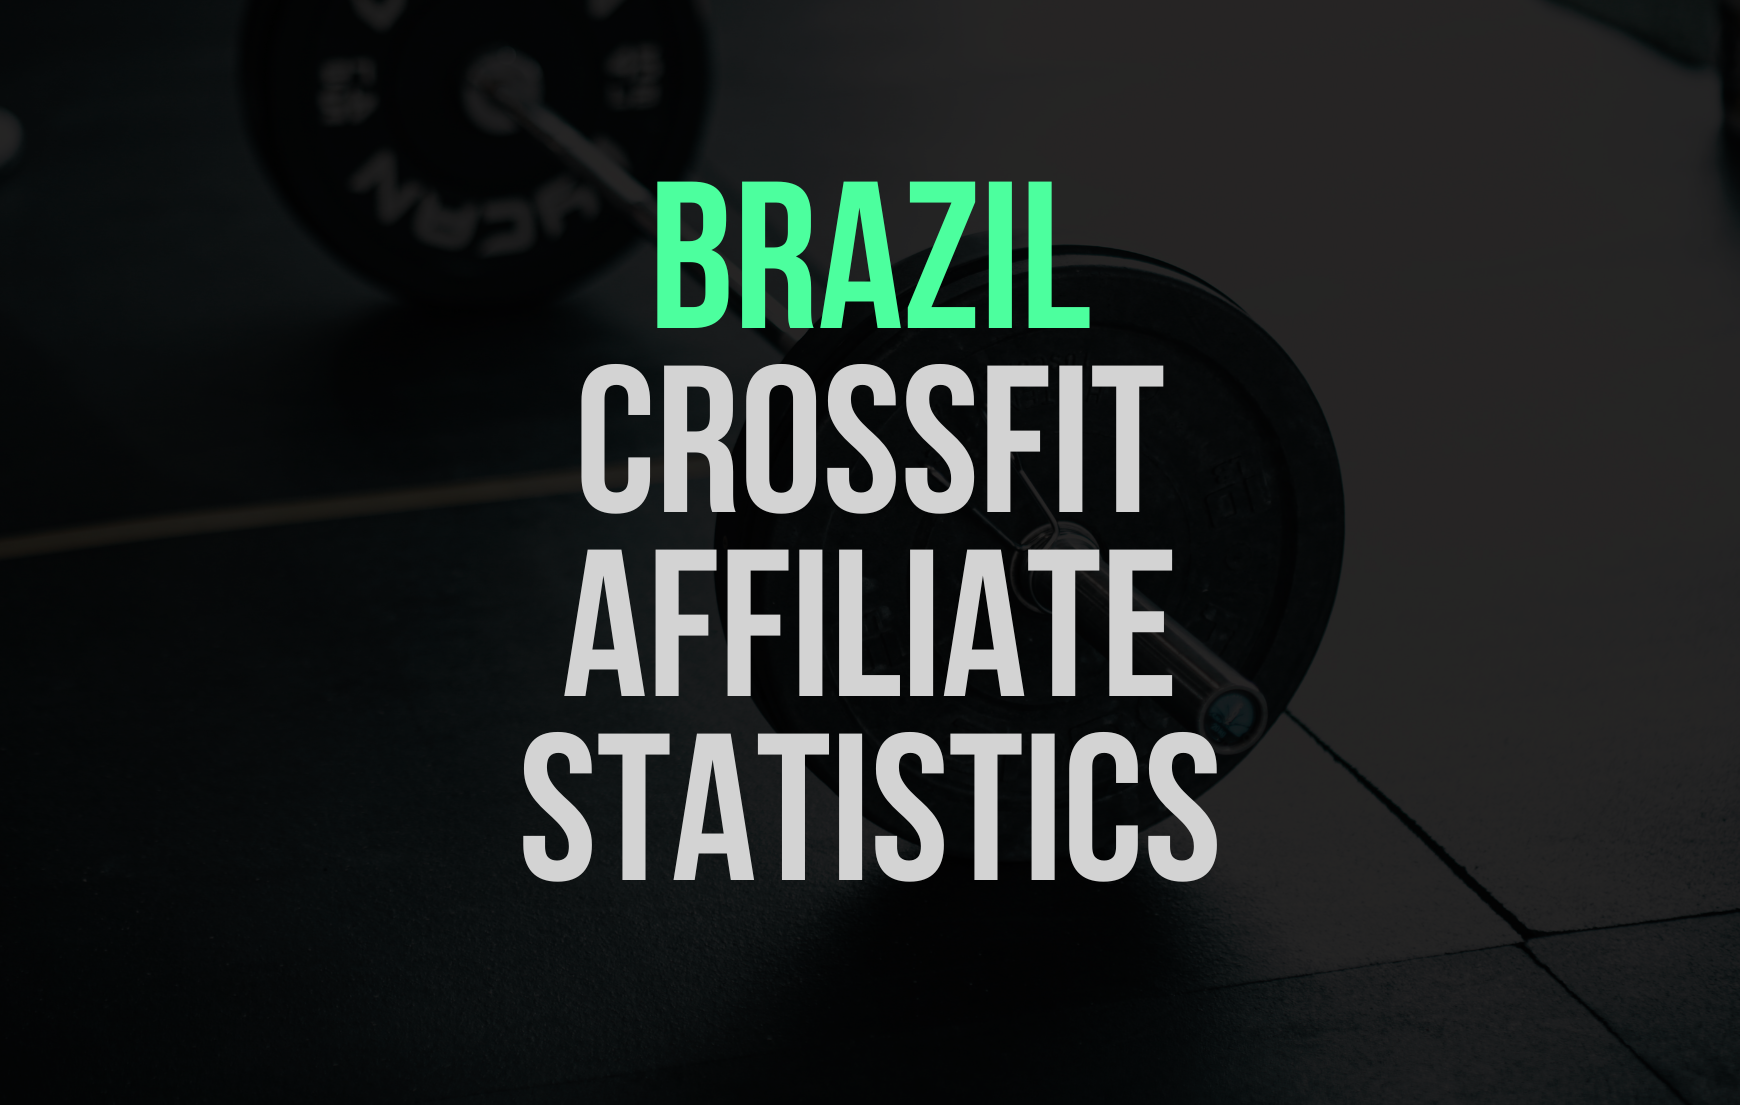 Brazil crossfit affiliate statistics